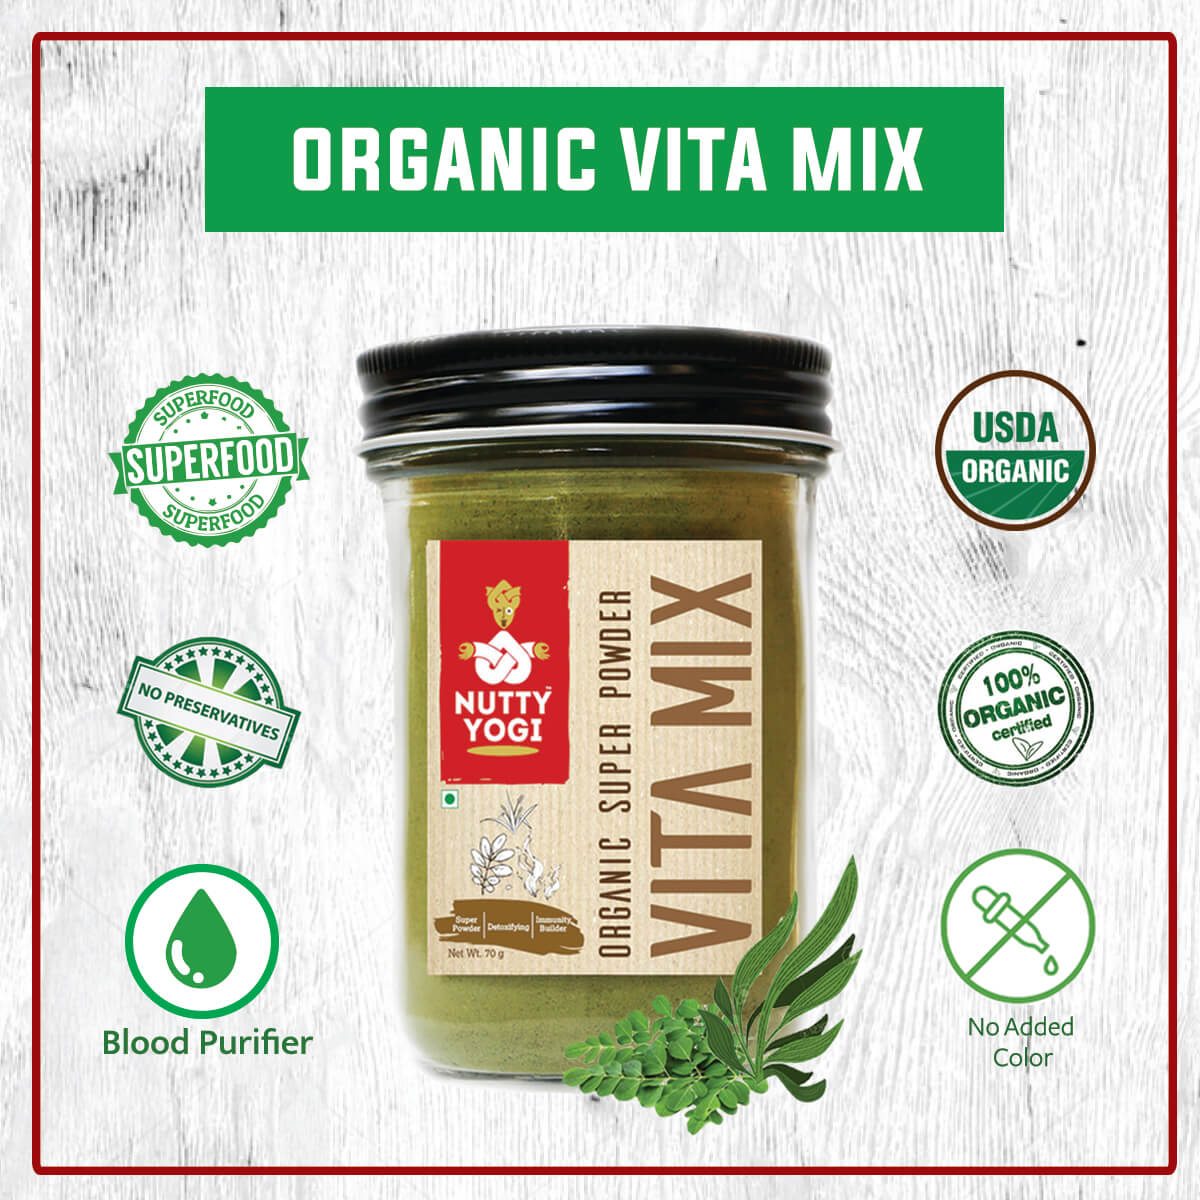 Organic Vita Mix.